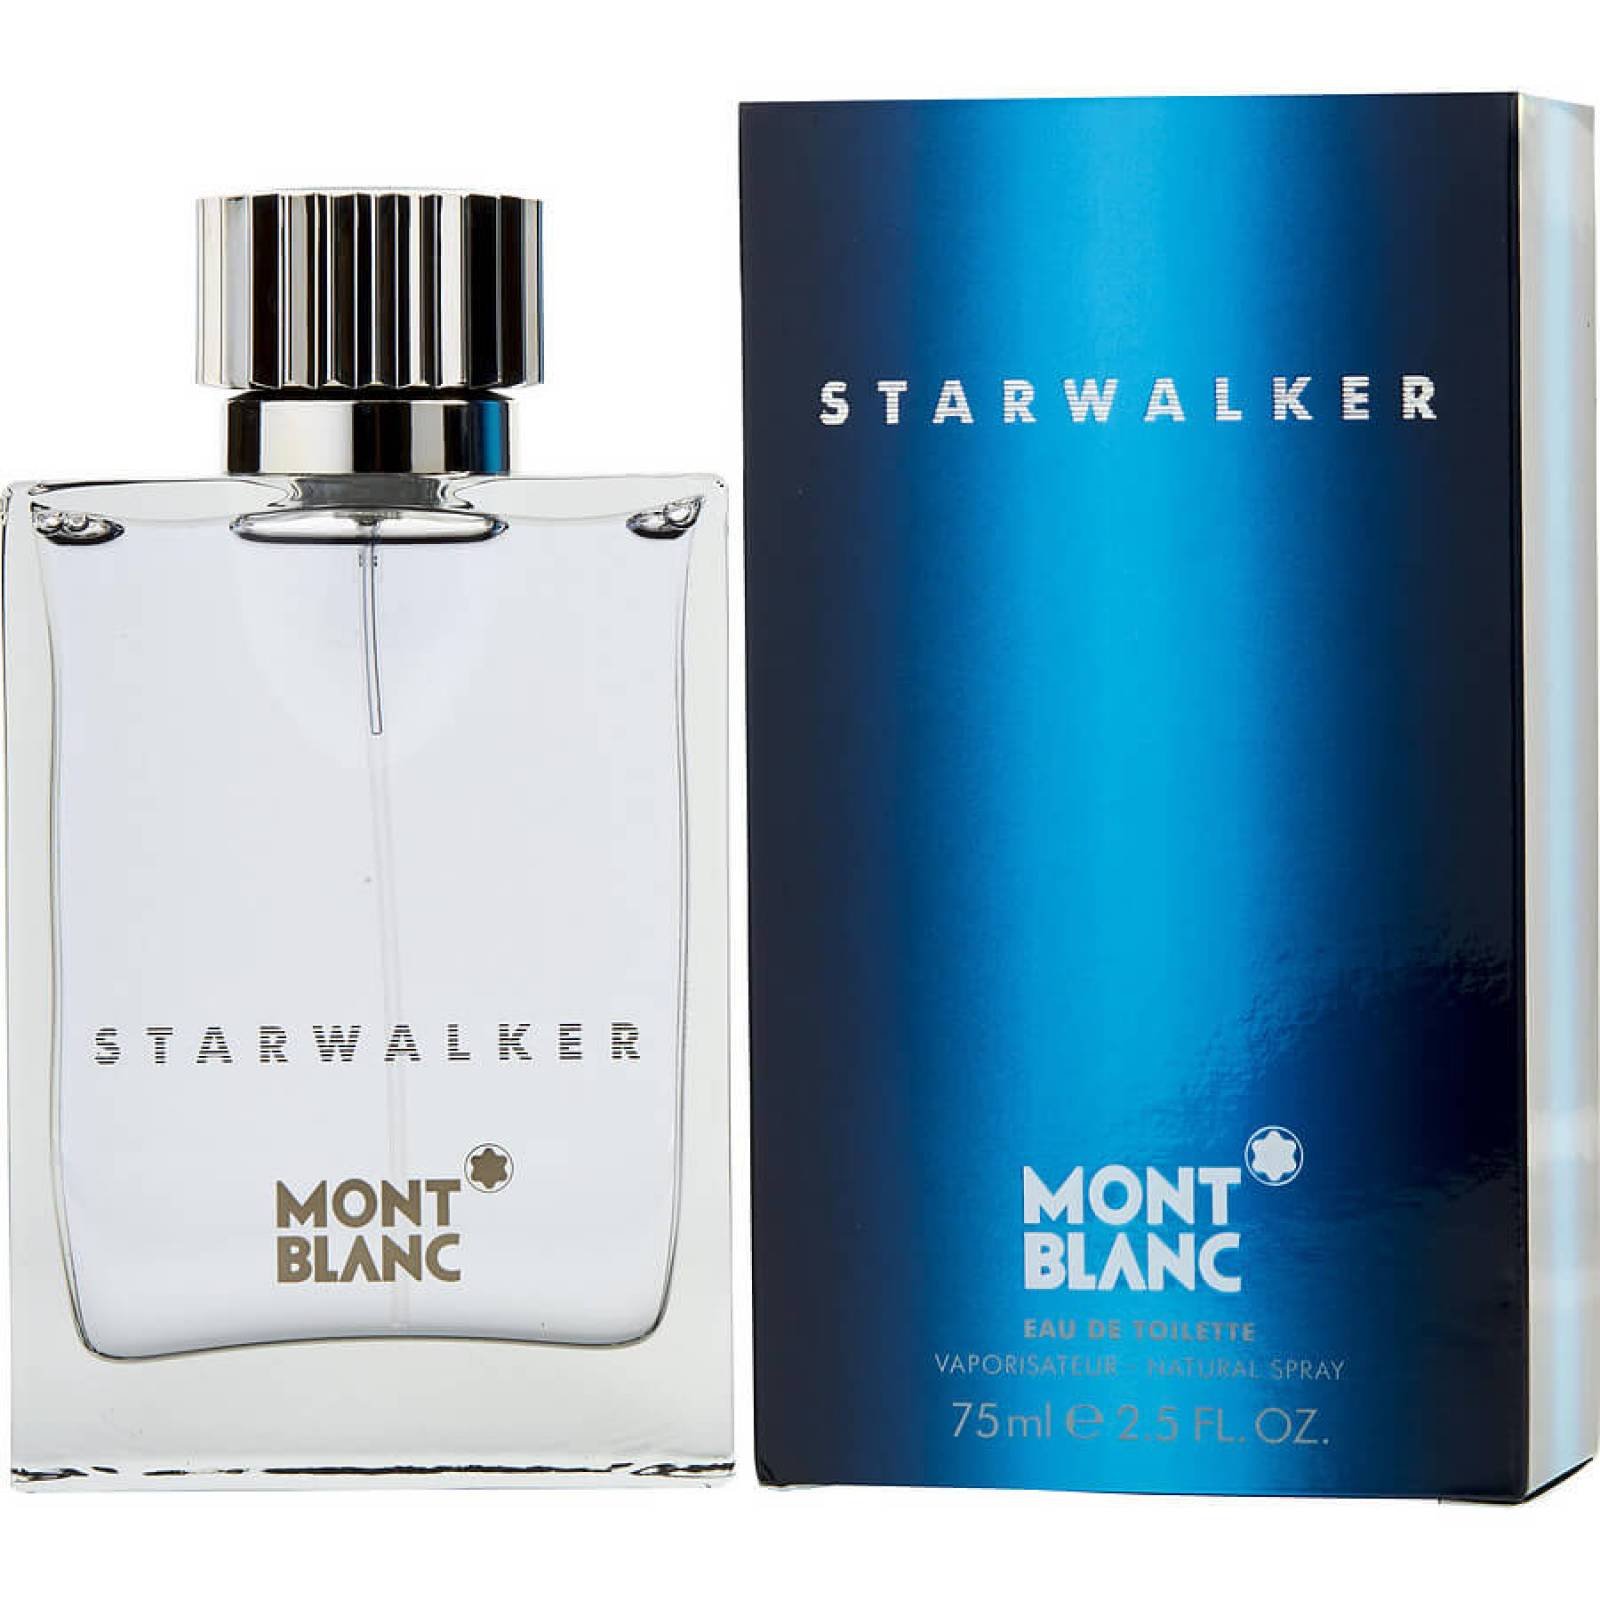 Perfume Starwalker Hombre De Mont Blanc Edt 75ml Original